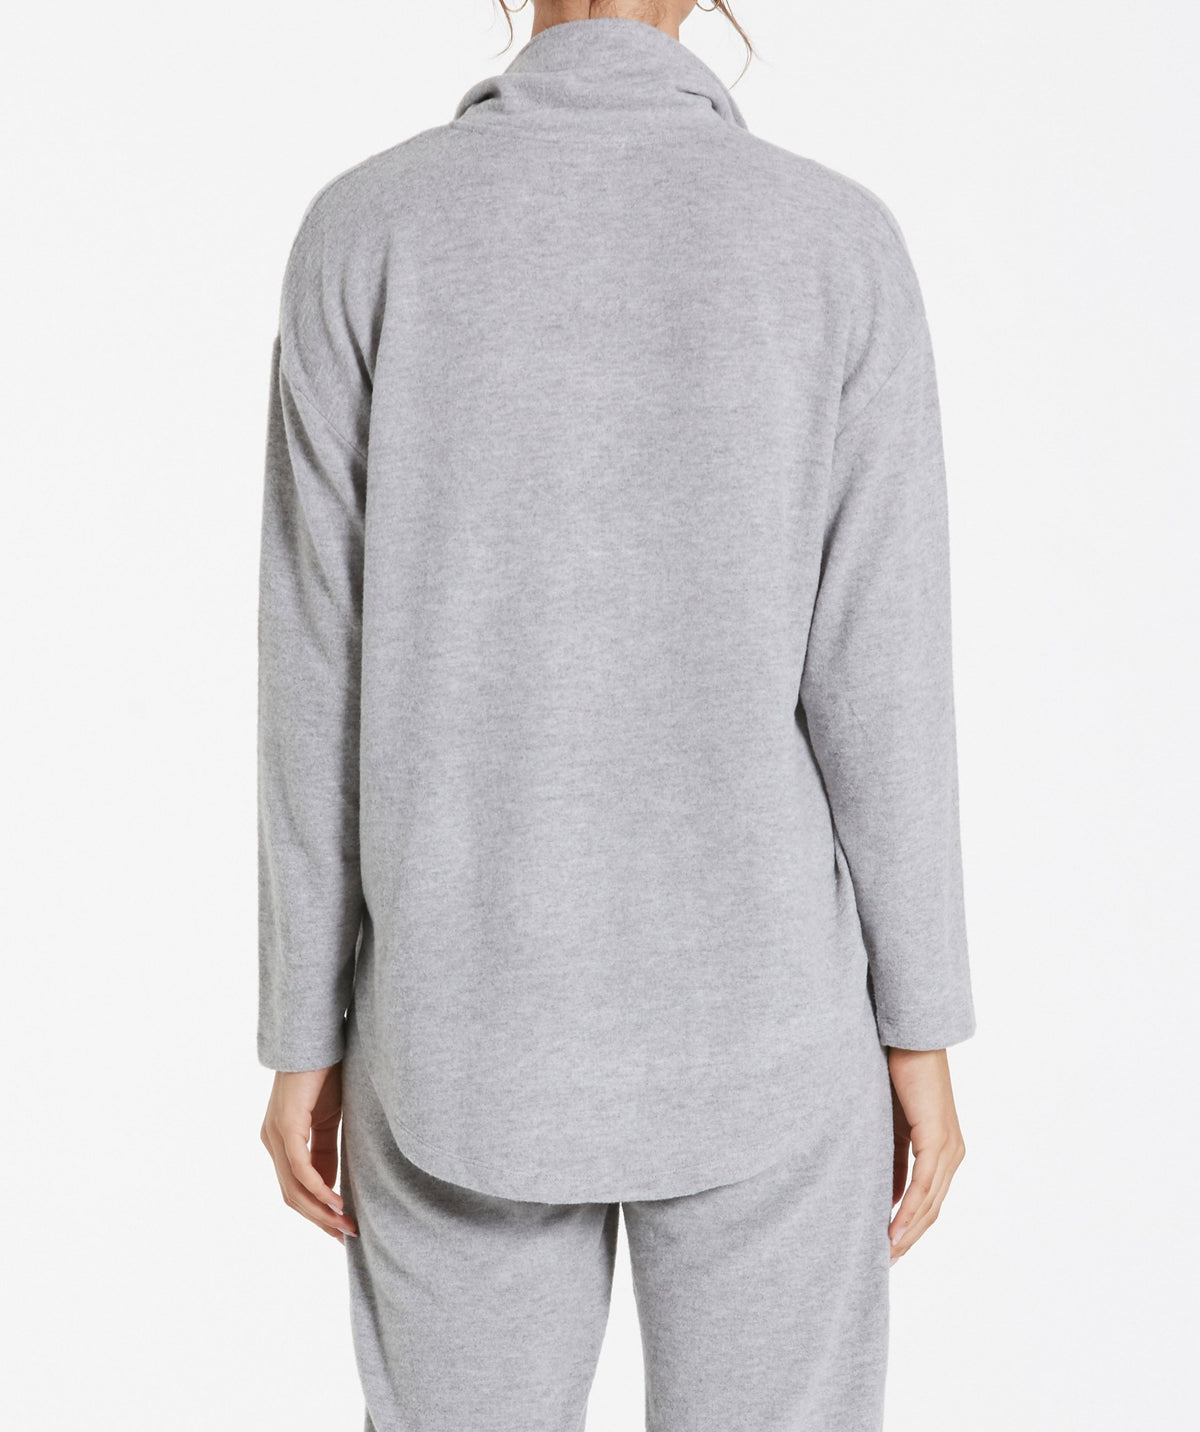 CHARLEIGH sweater in heather grey